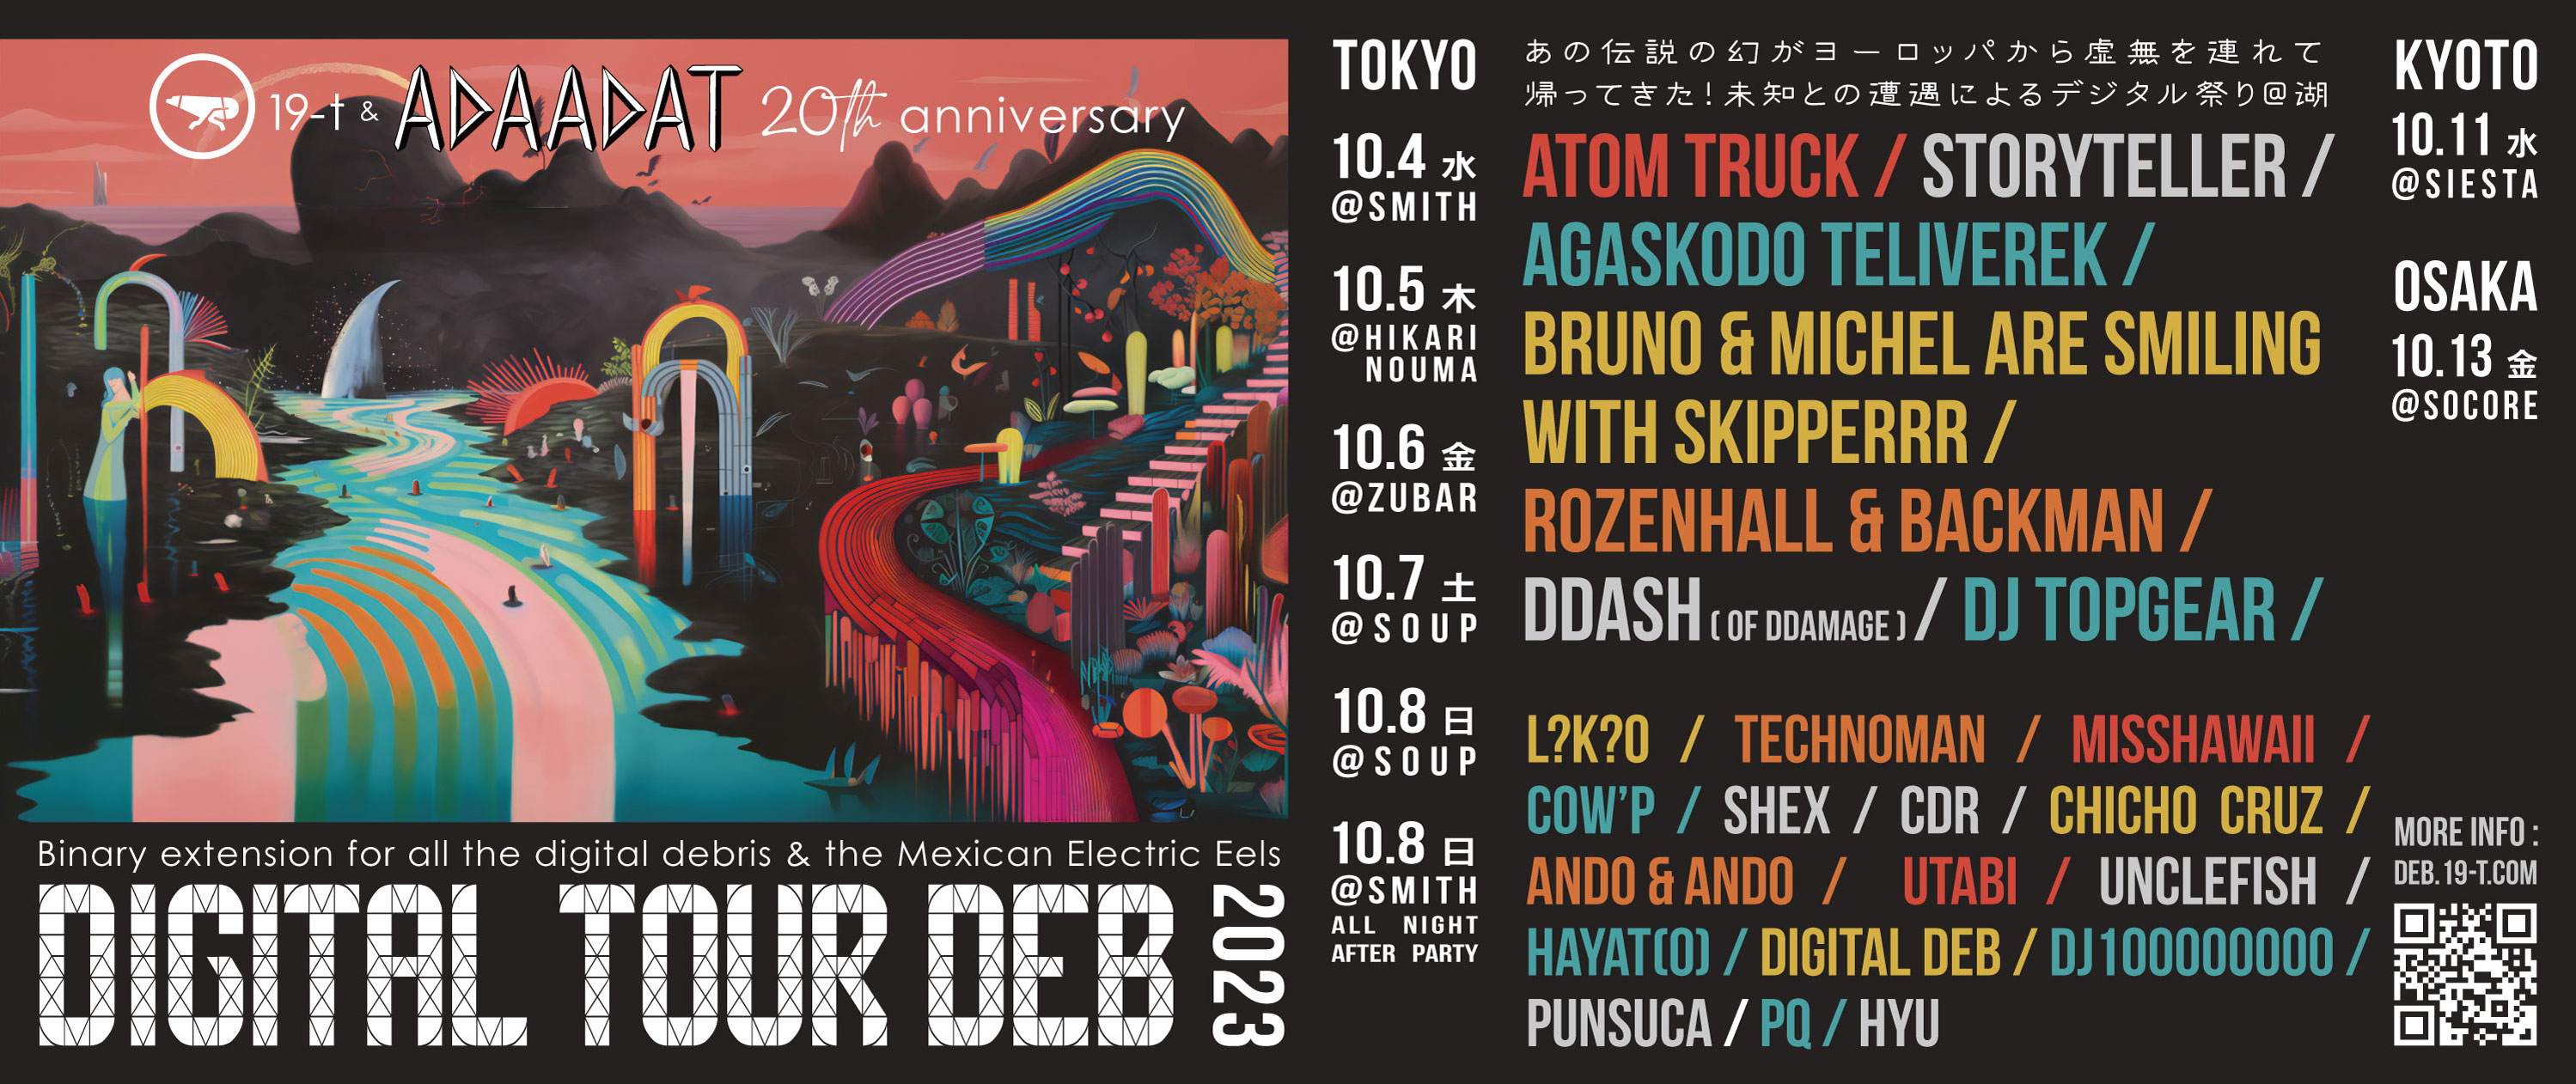 Adaadat records & 19-t records 20th anniversary Japan tour showcase - フライヤー裏